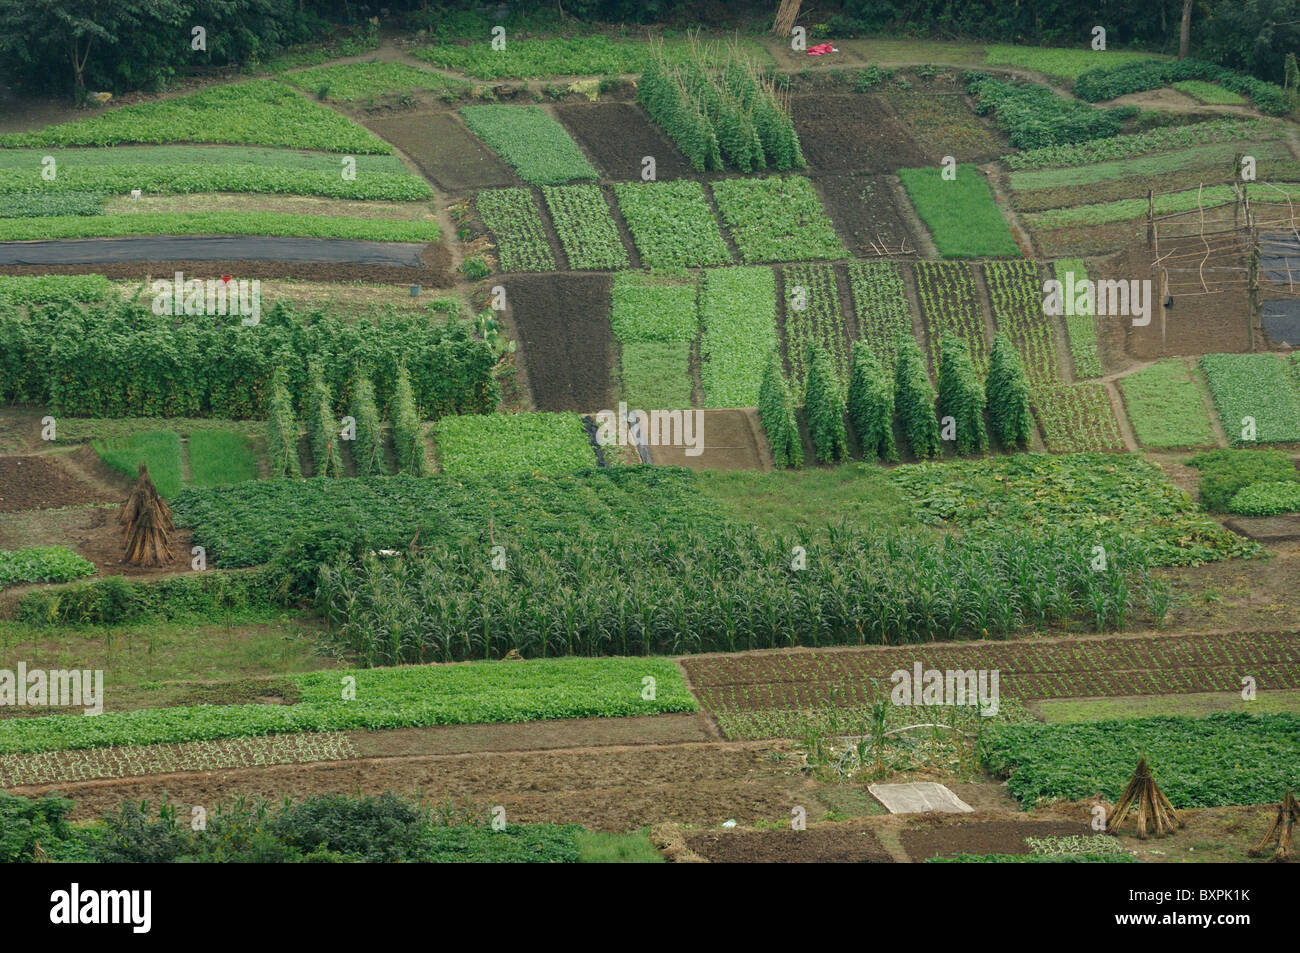 Small farming plots growing produce in China Stock Photo